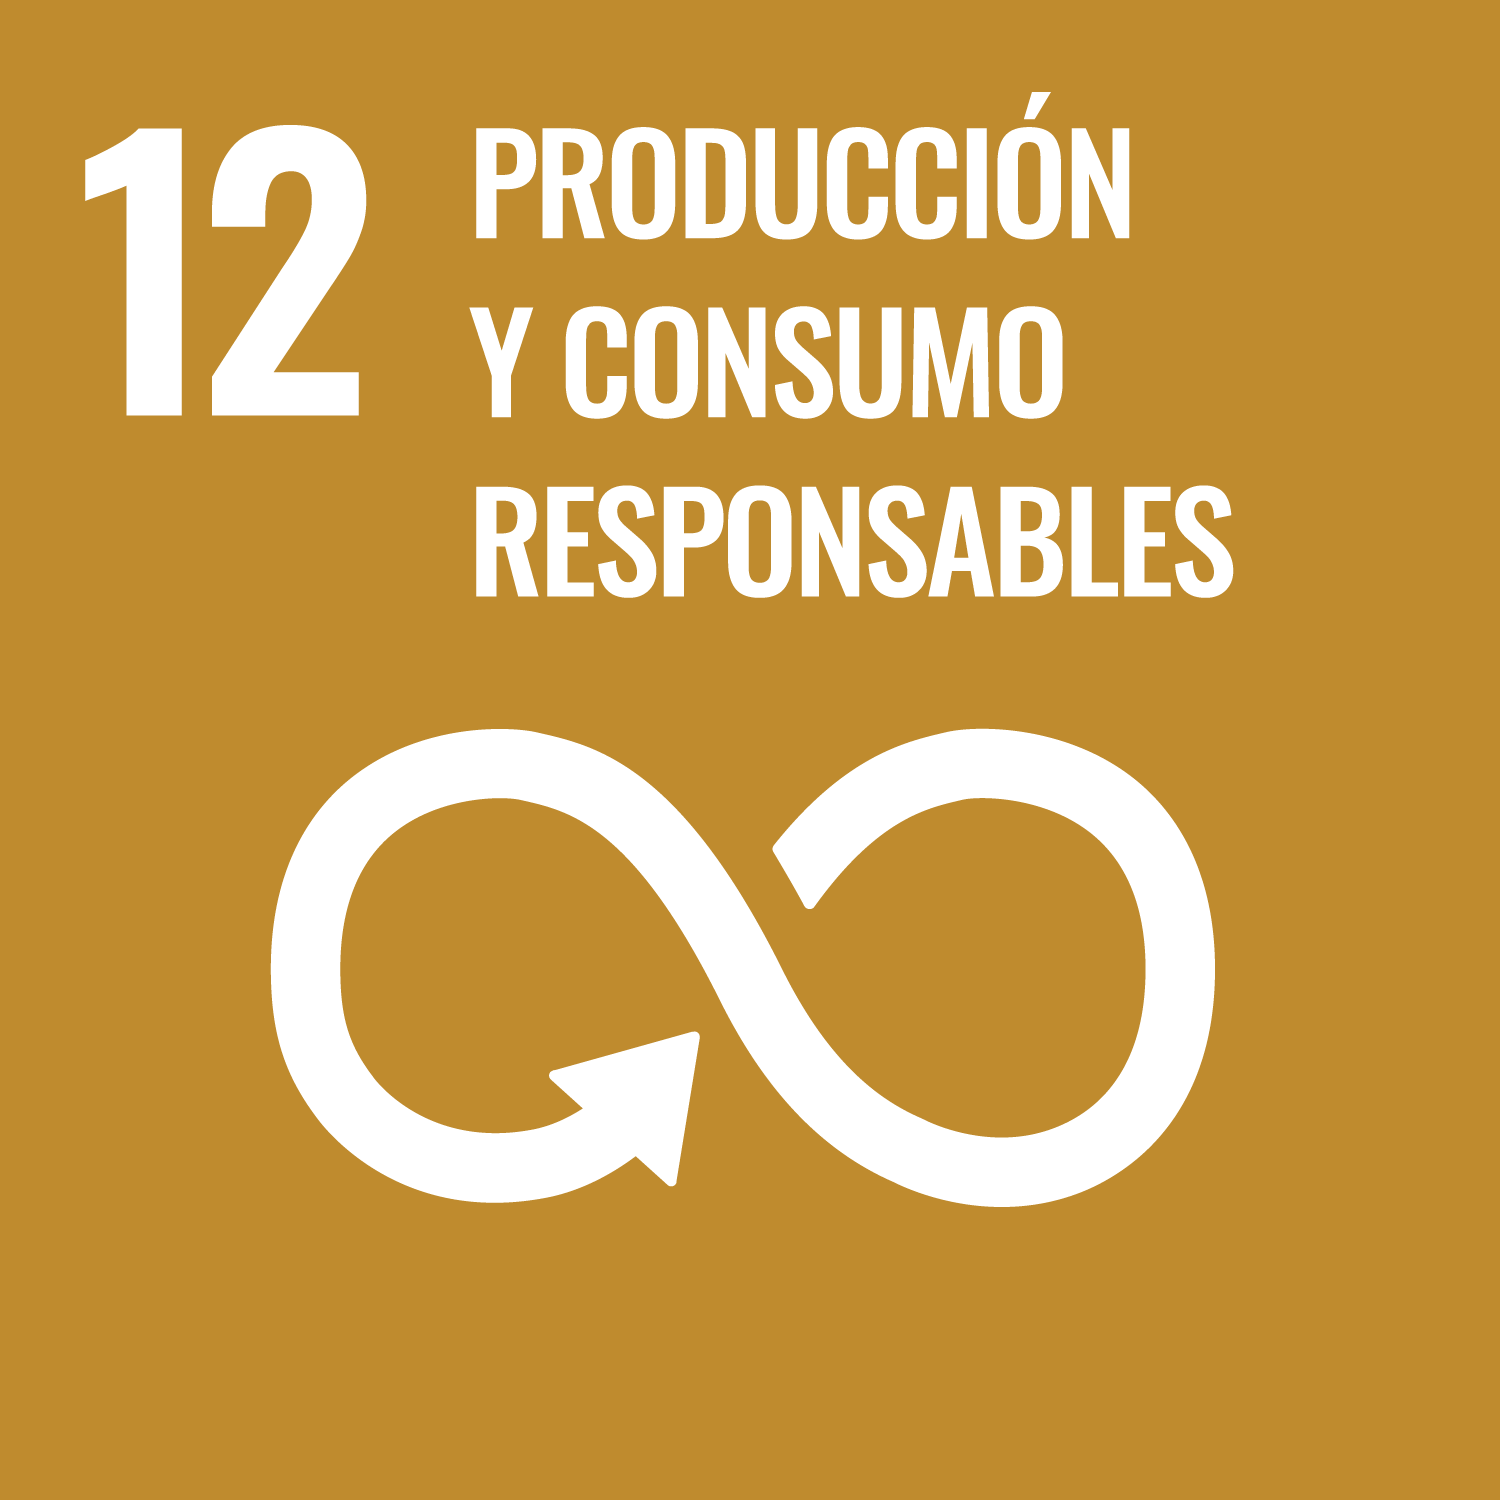 ODS 12 Producción y consumo responsable en Visita Gijón Profesional